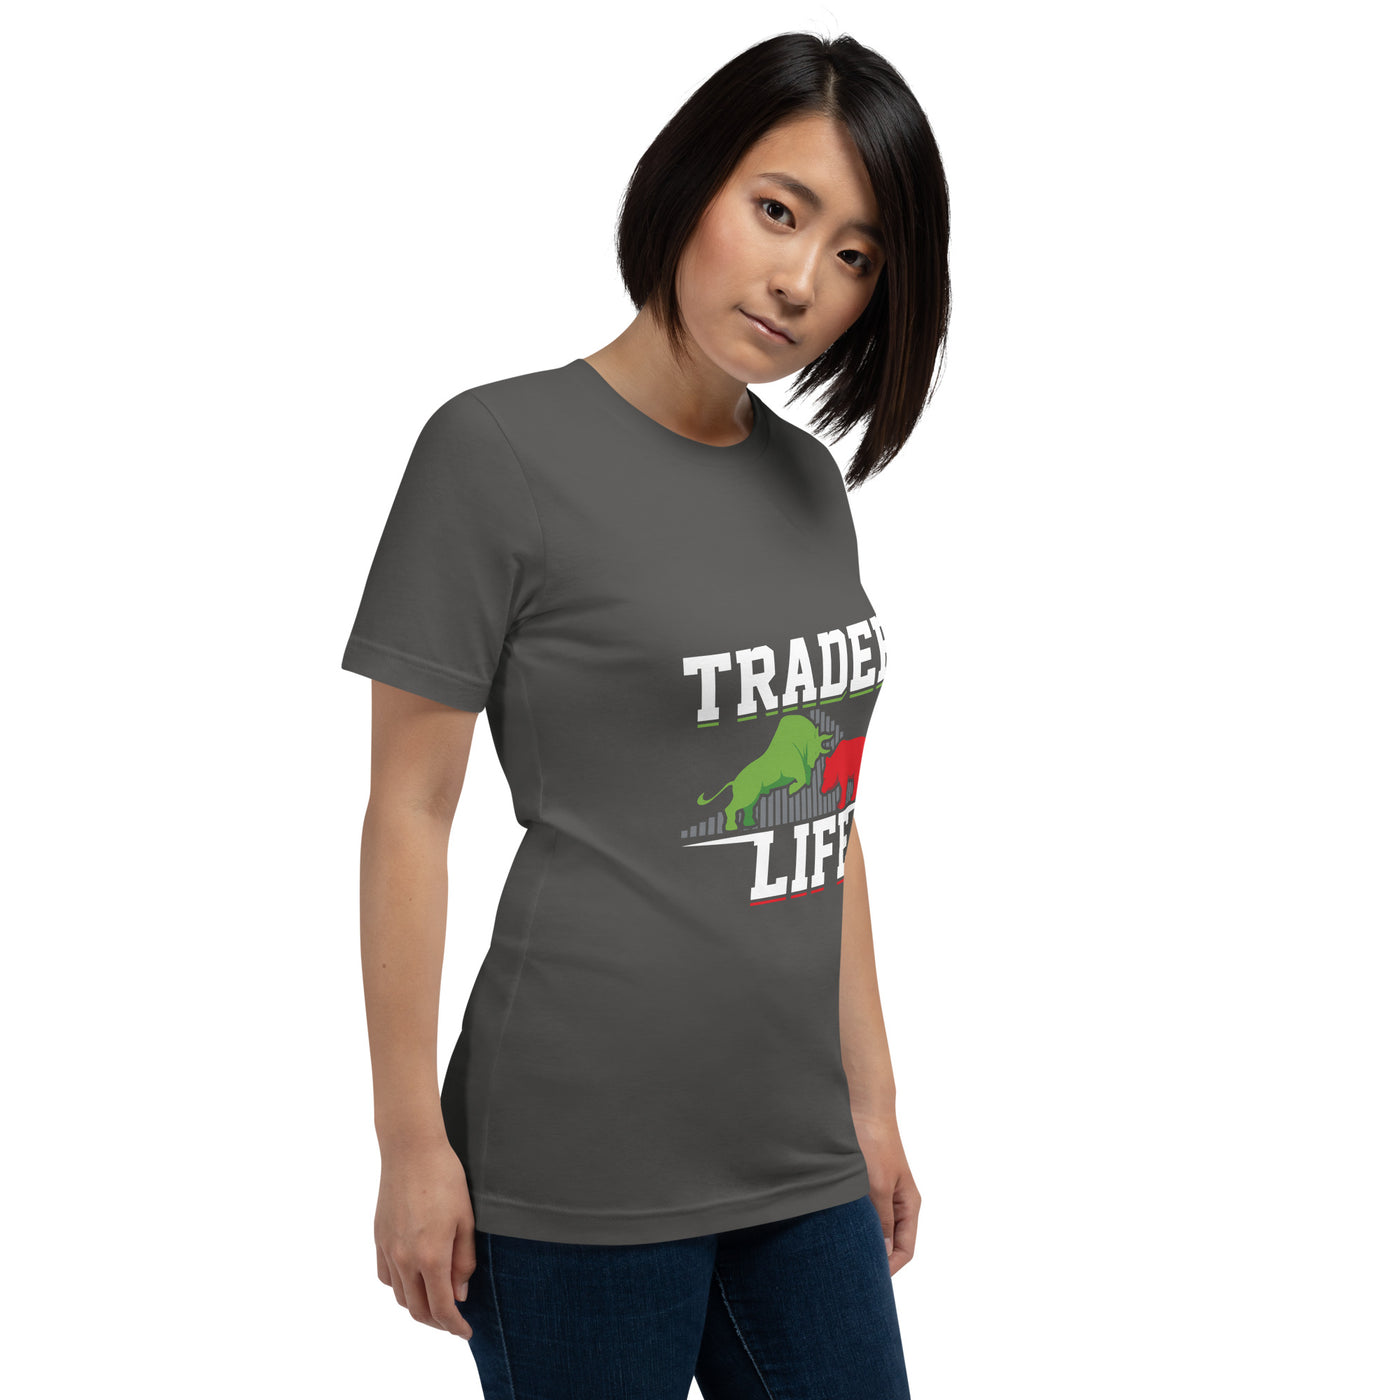 Trader life - Unisex t-shirt